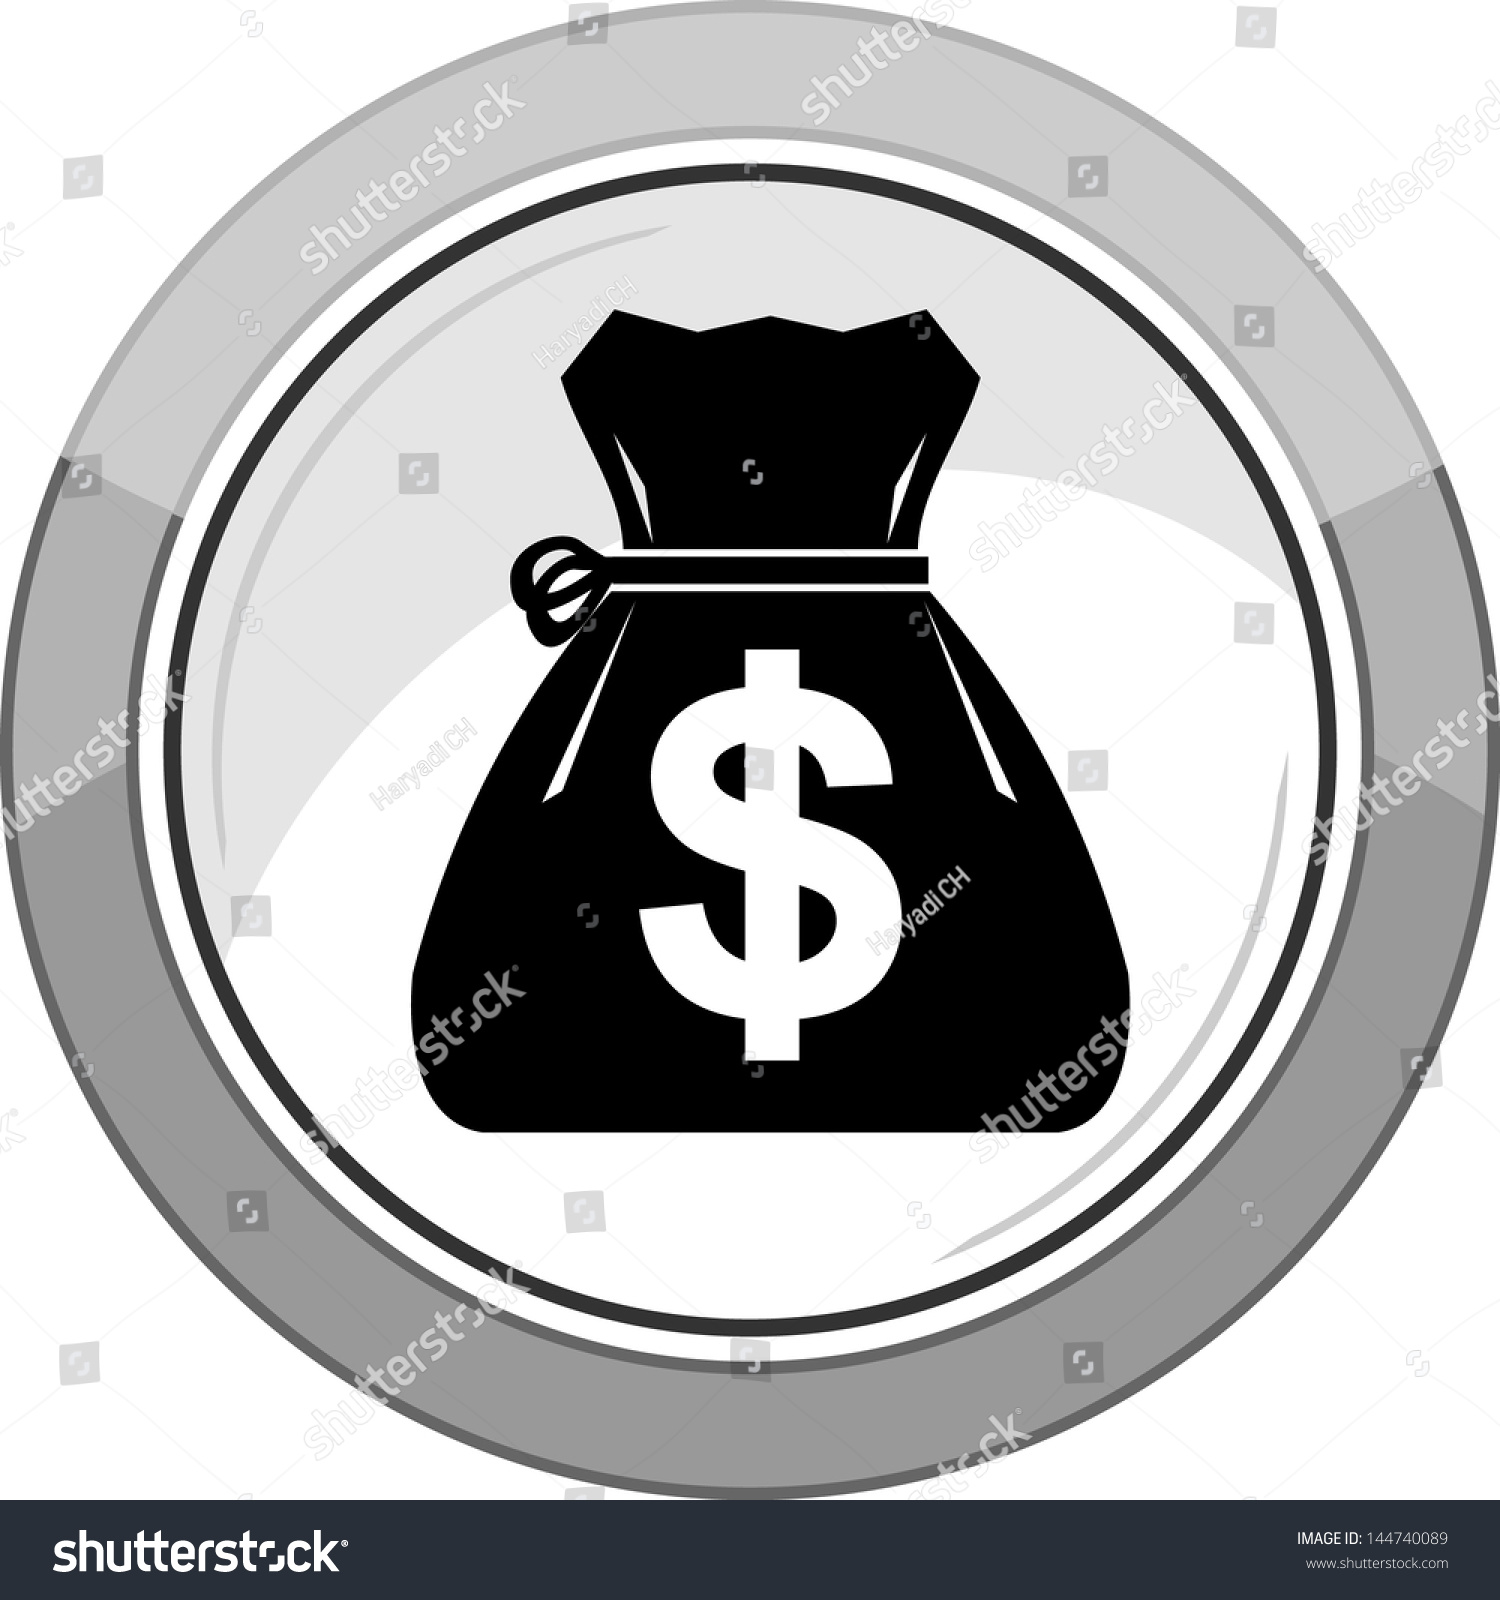 Money Icon Stock Vector Illustration 144740089 : Shutterstock